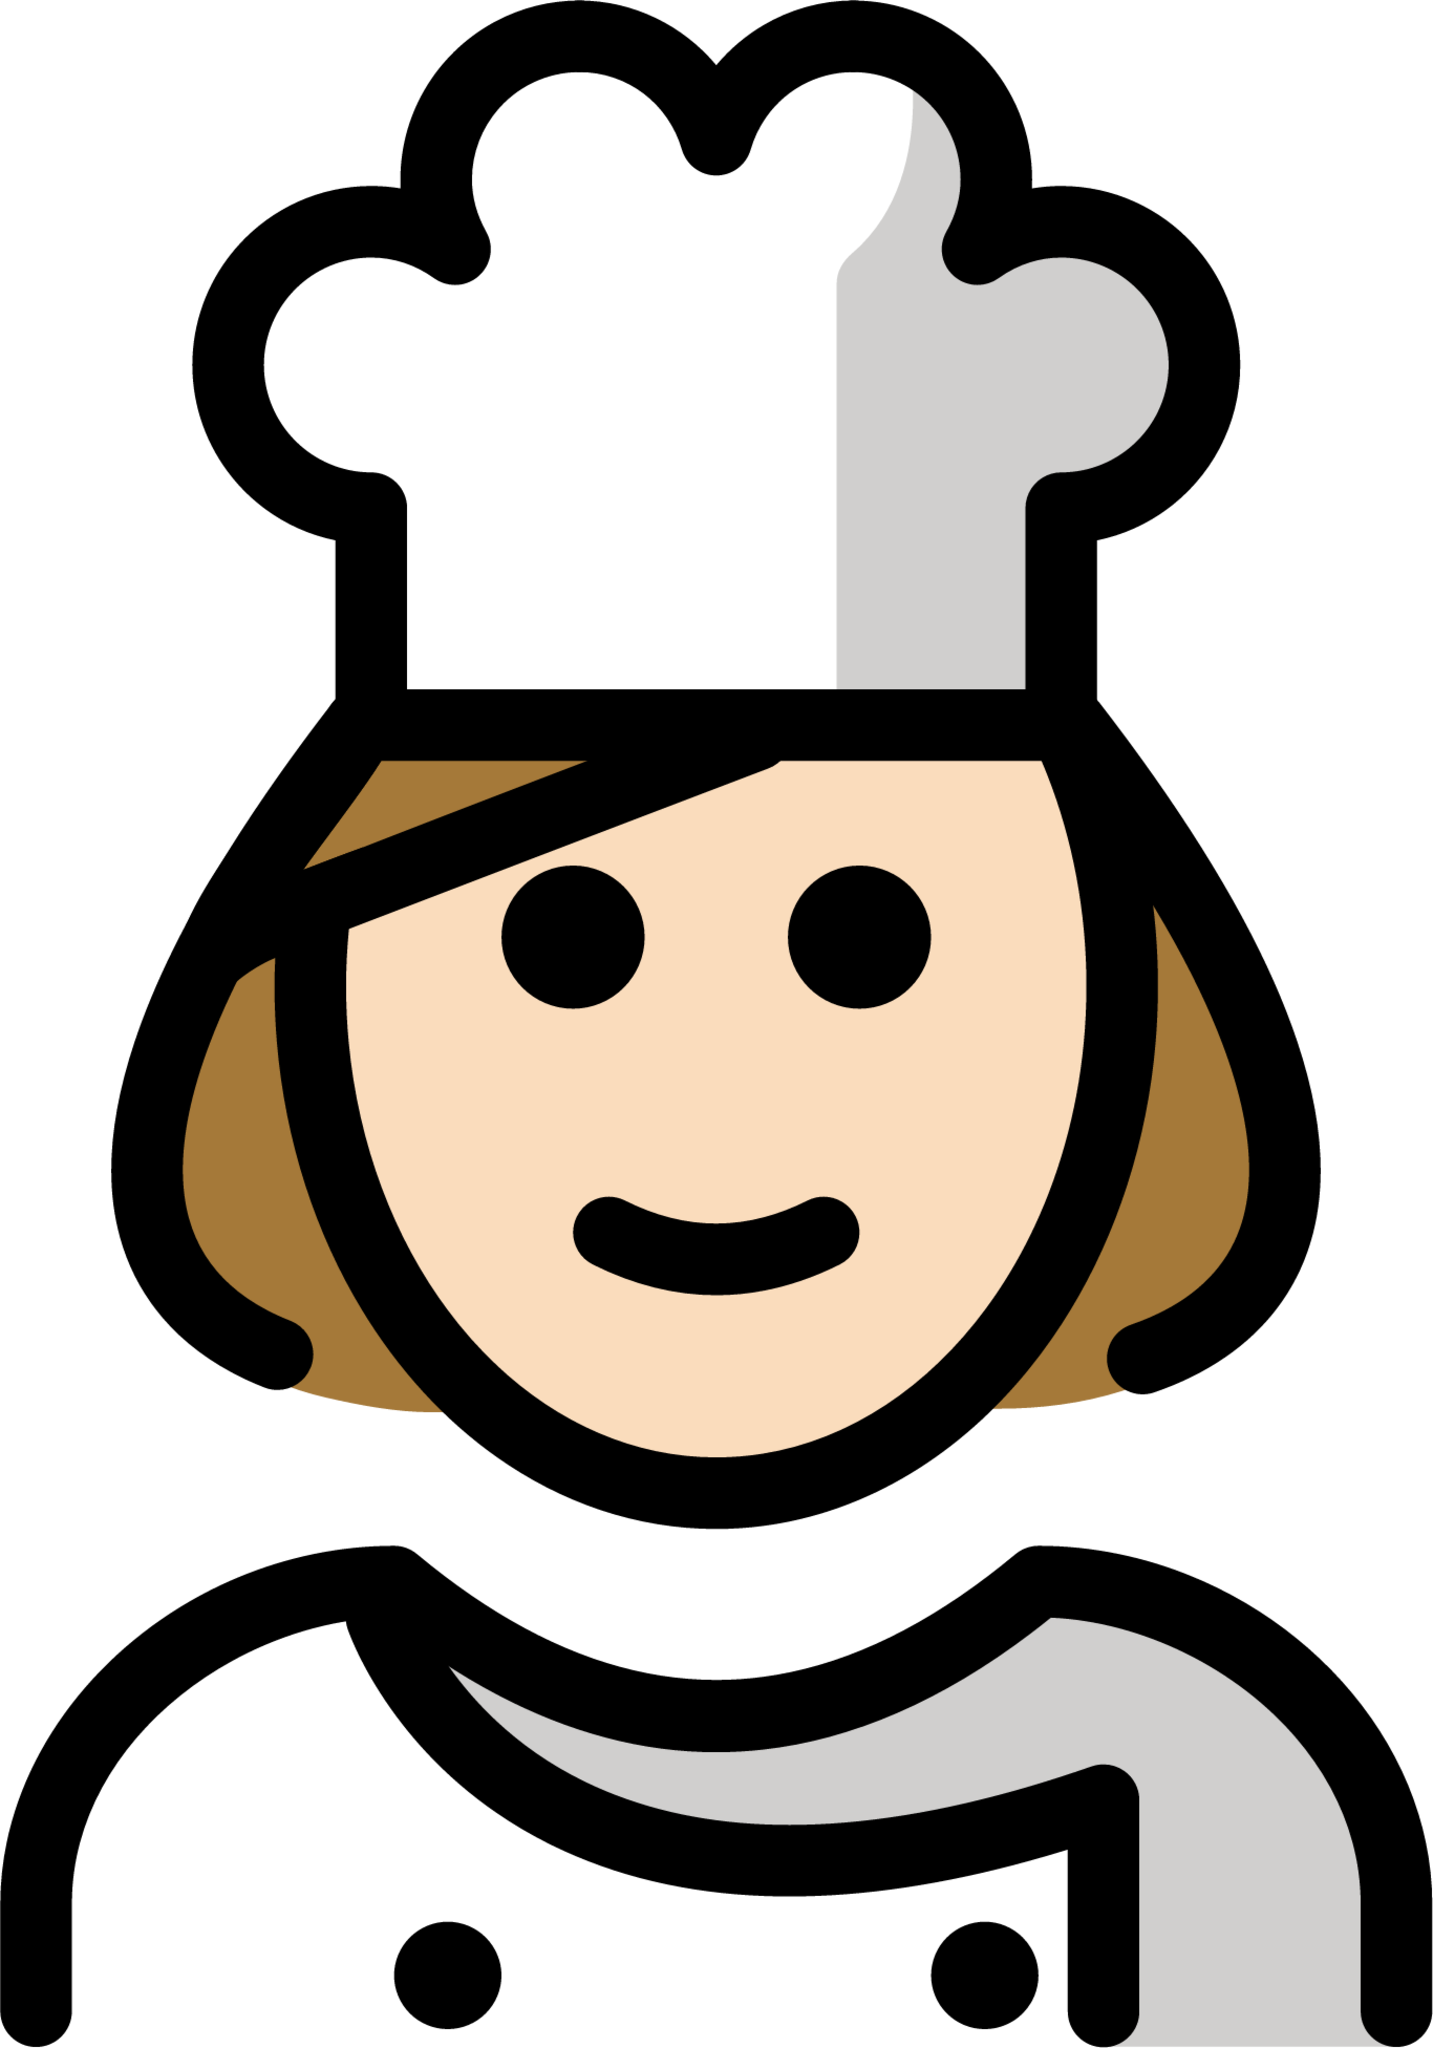 woman cook: light skin tone emoji